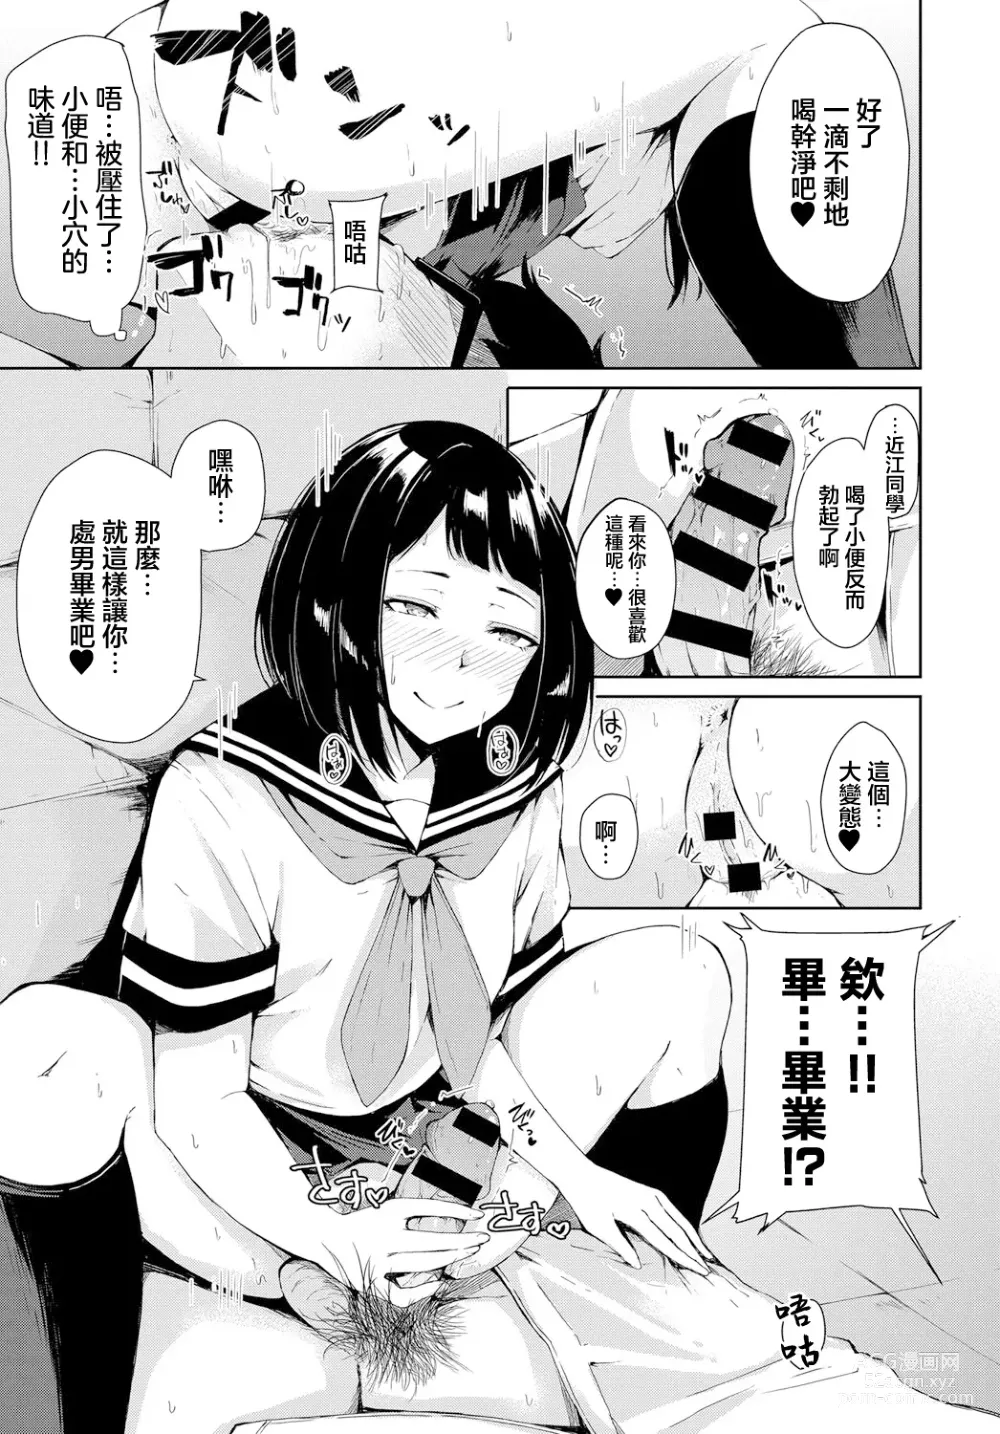 Page 12 of manga 會錯意處男和隱藏婊子